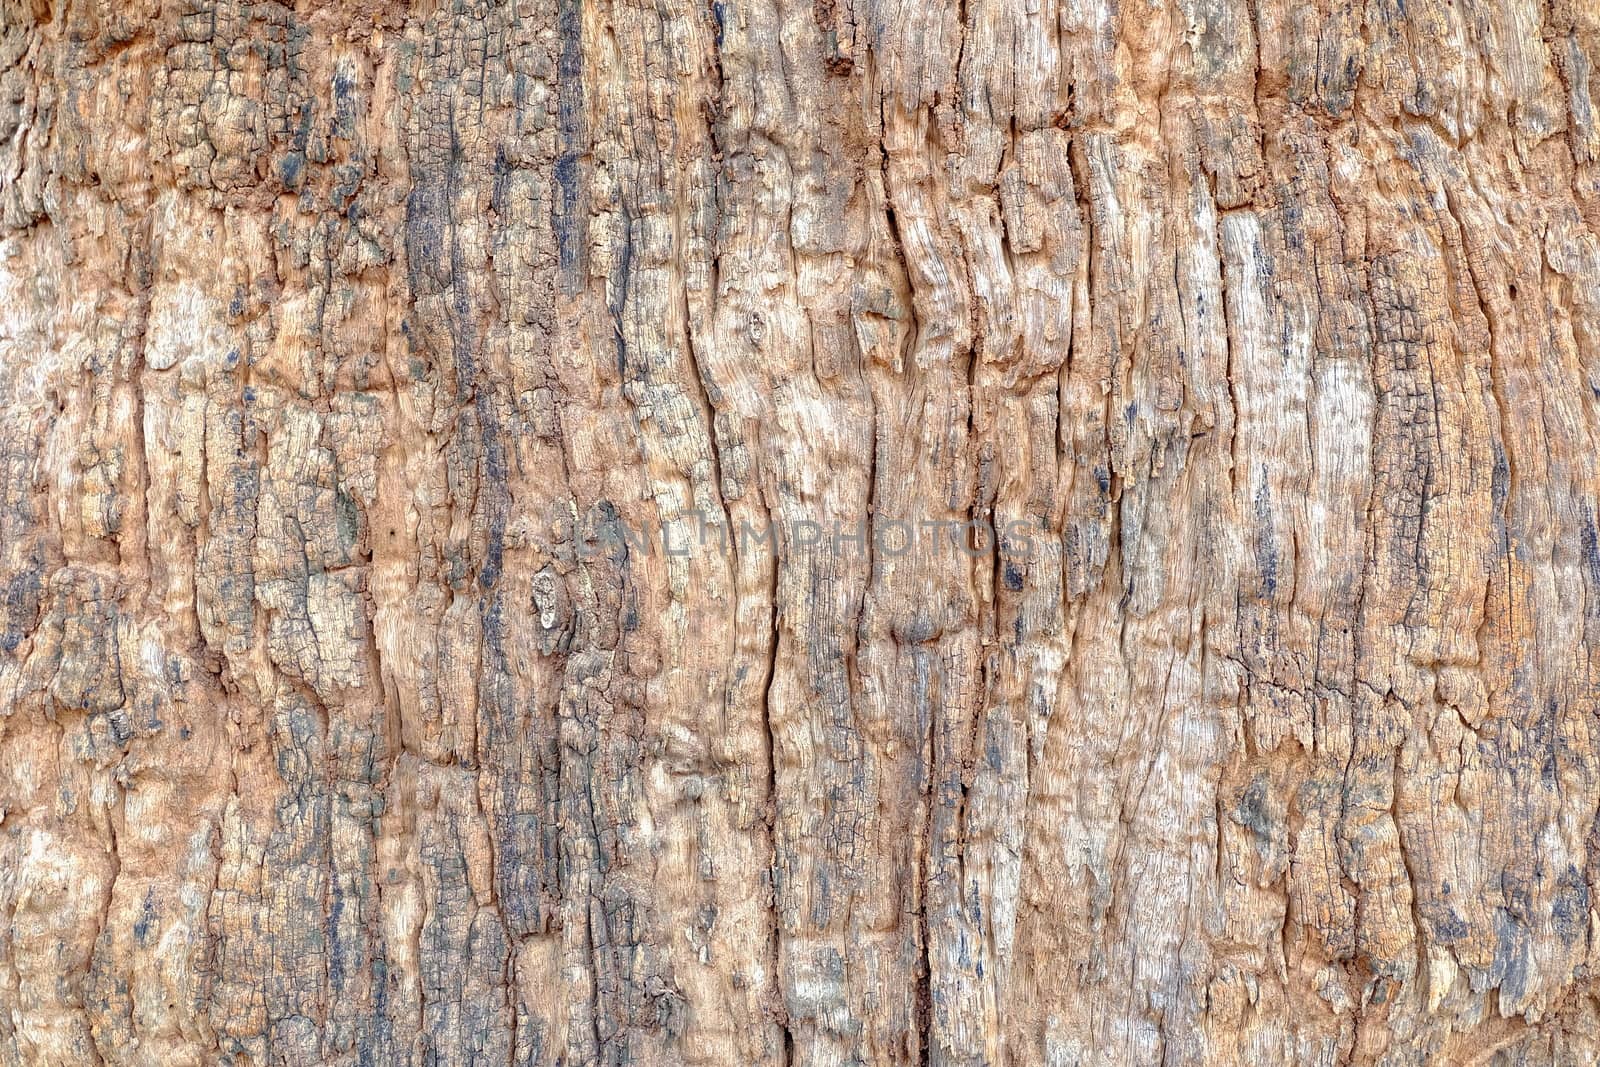 Bark Texture Background.